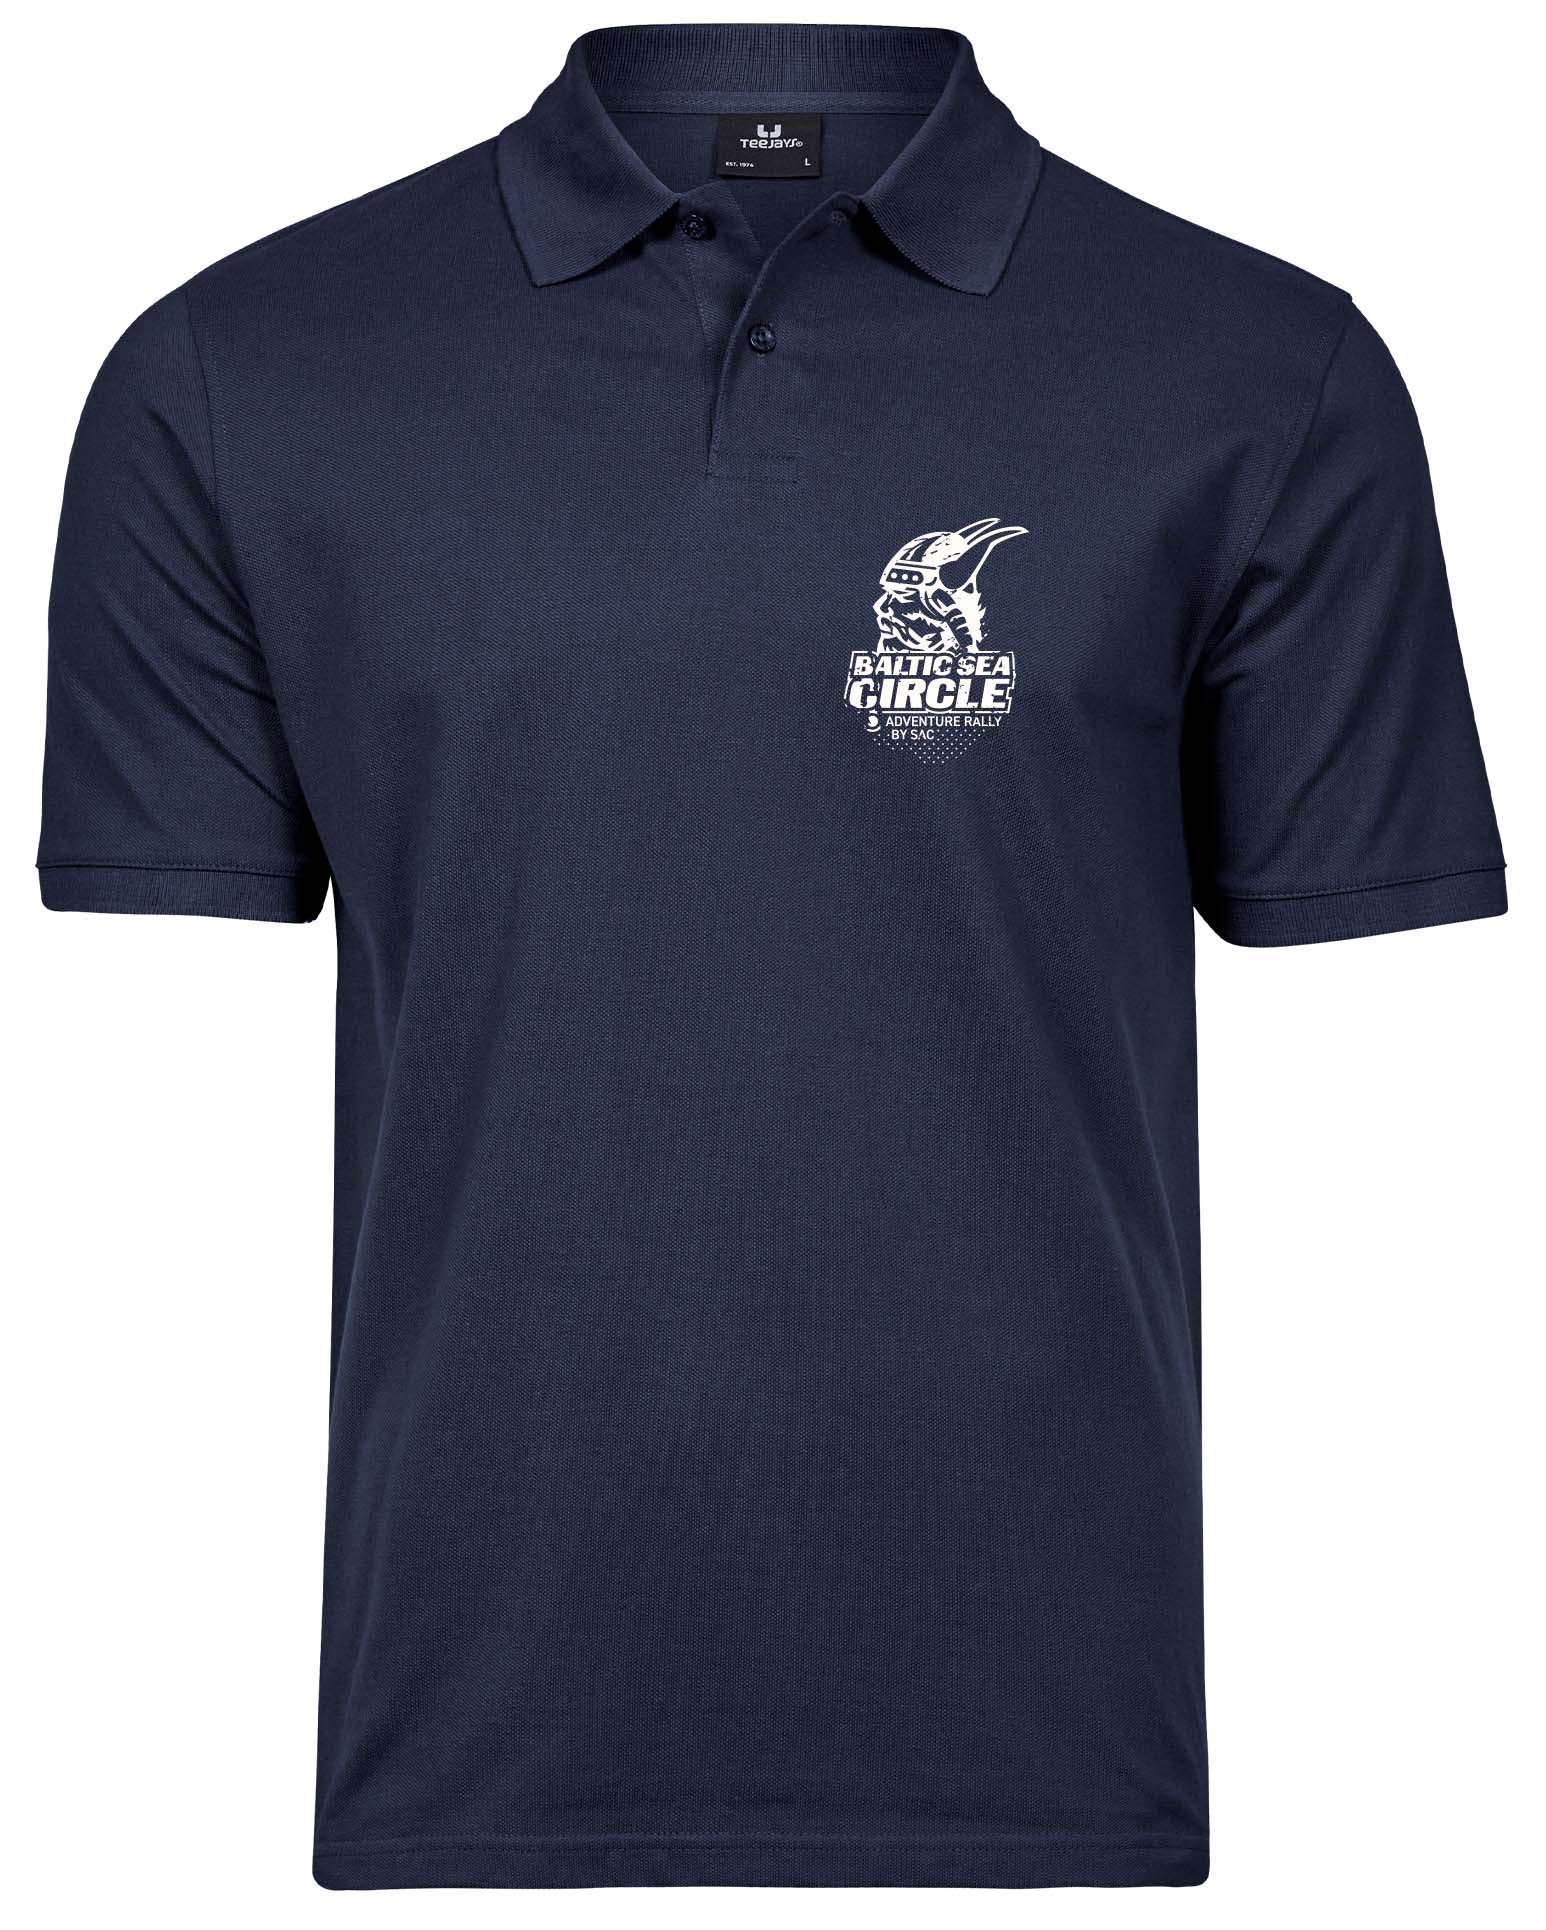 BSC Polo Shirt - Navy